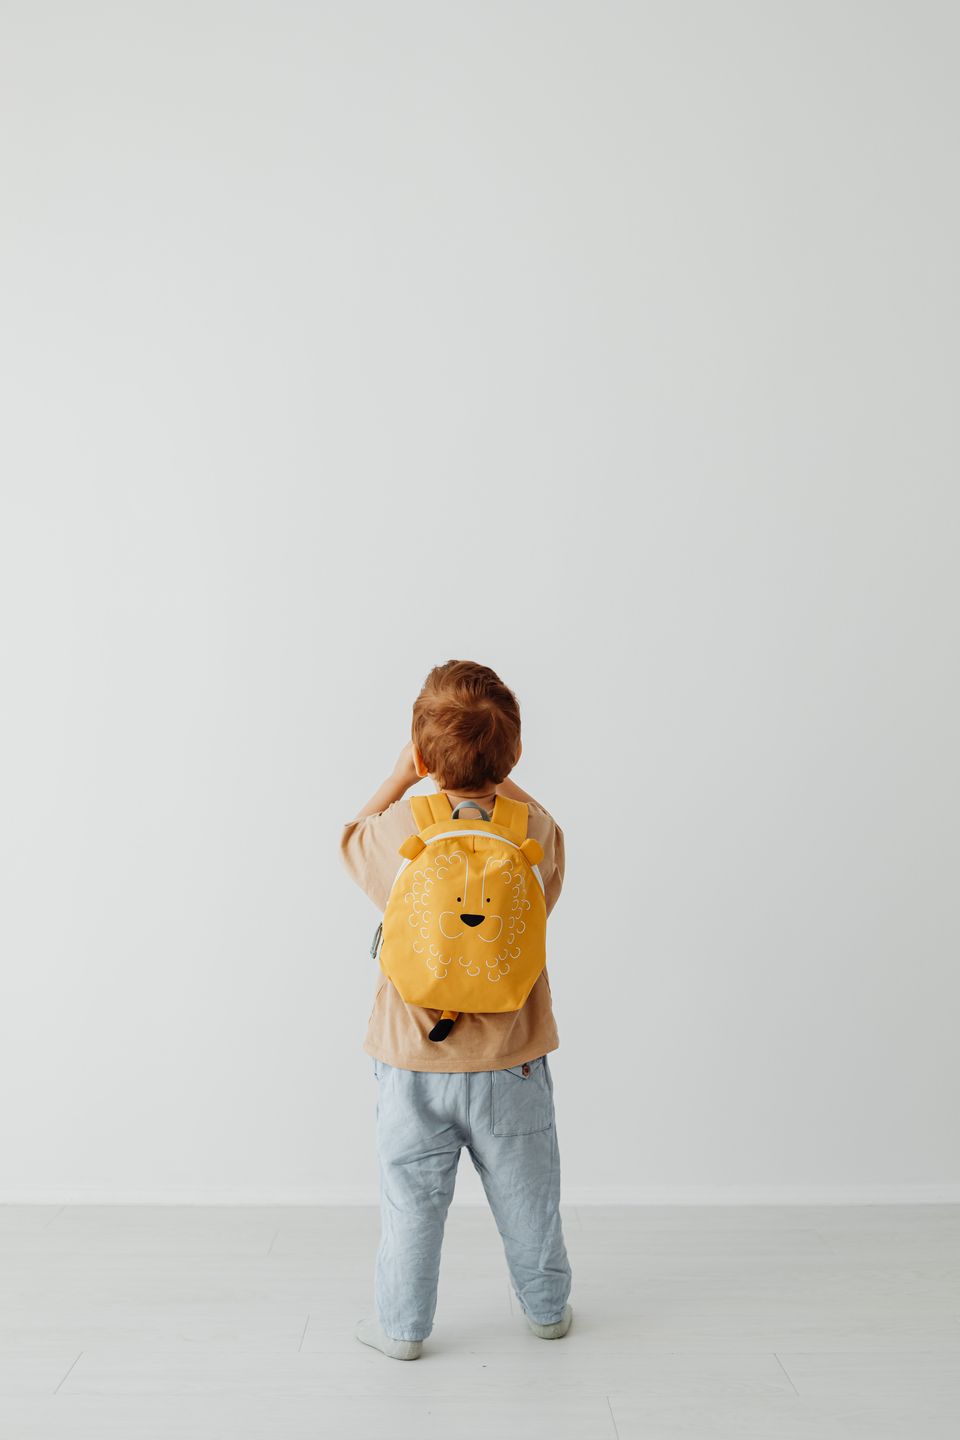 Best Toddler Backpacks for your Little Ones